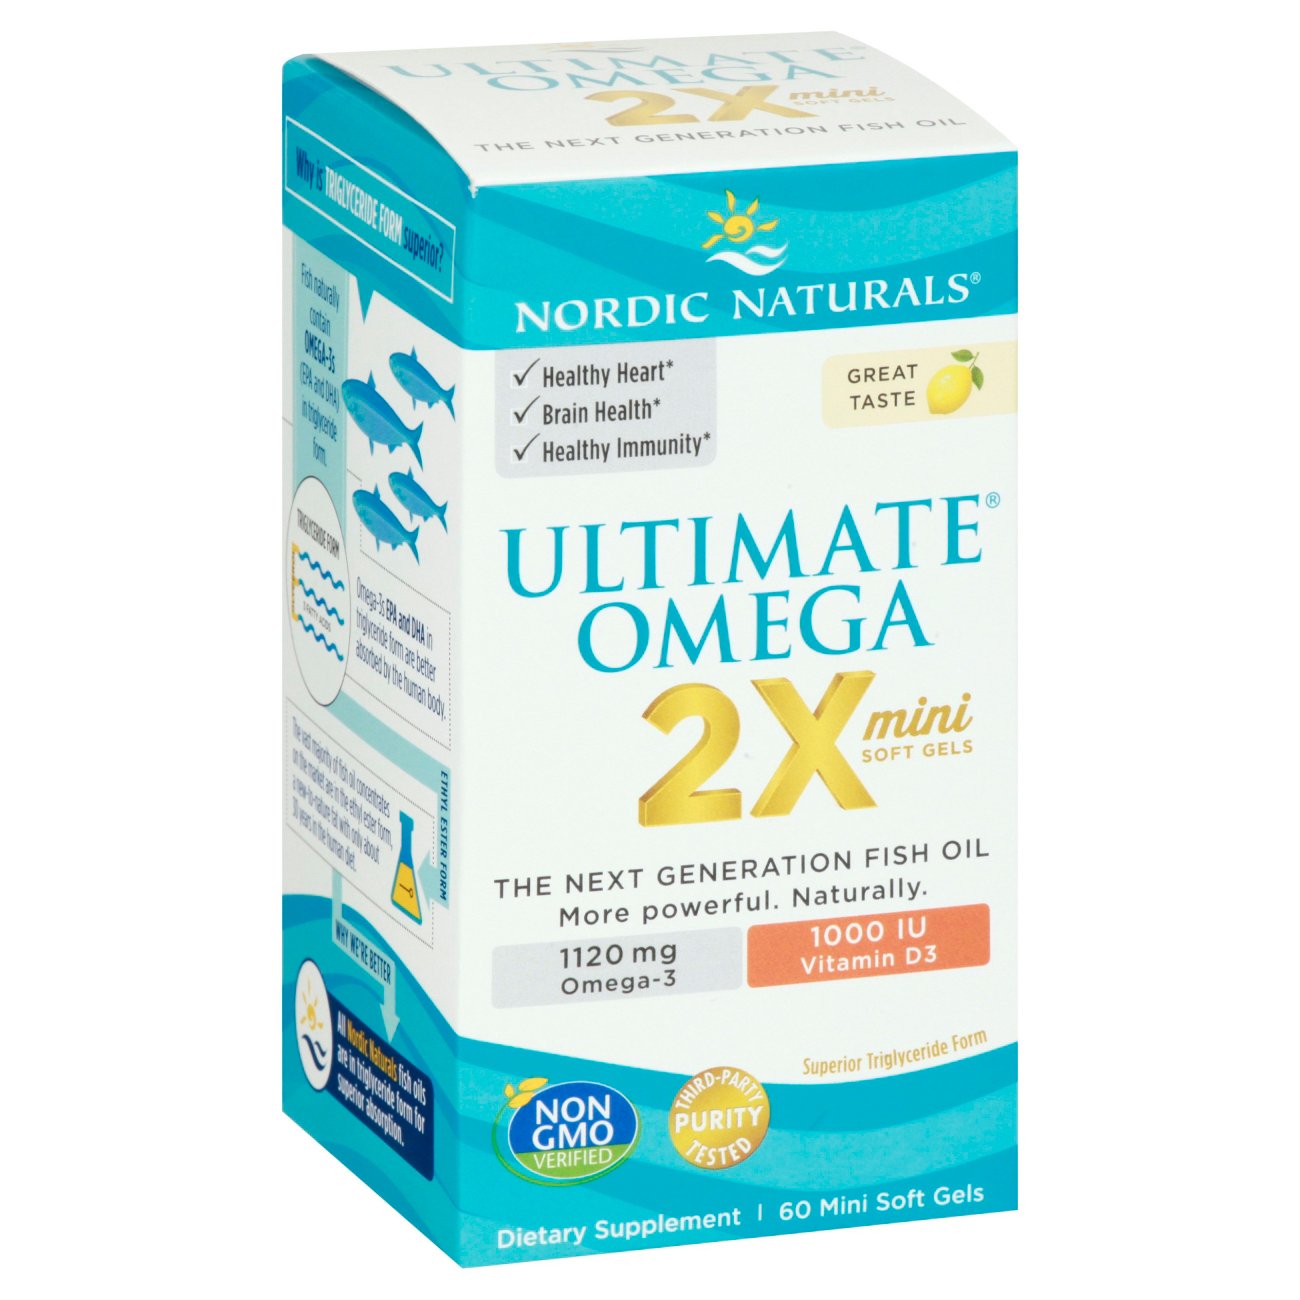 Nordic Naturals Ultimate Omega + CoQ10 Soft Gels - Shop Diet